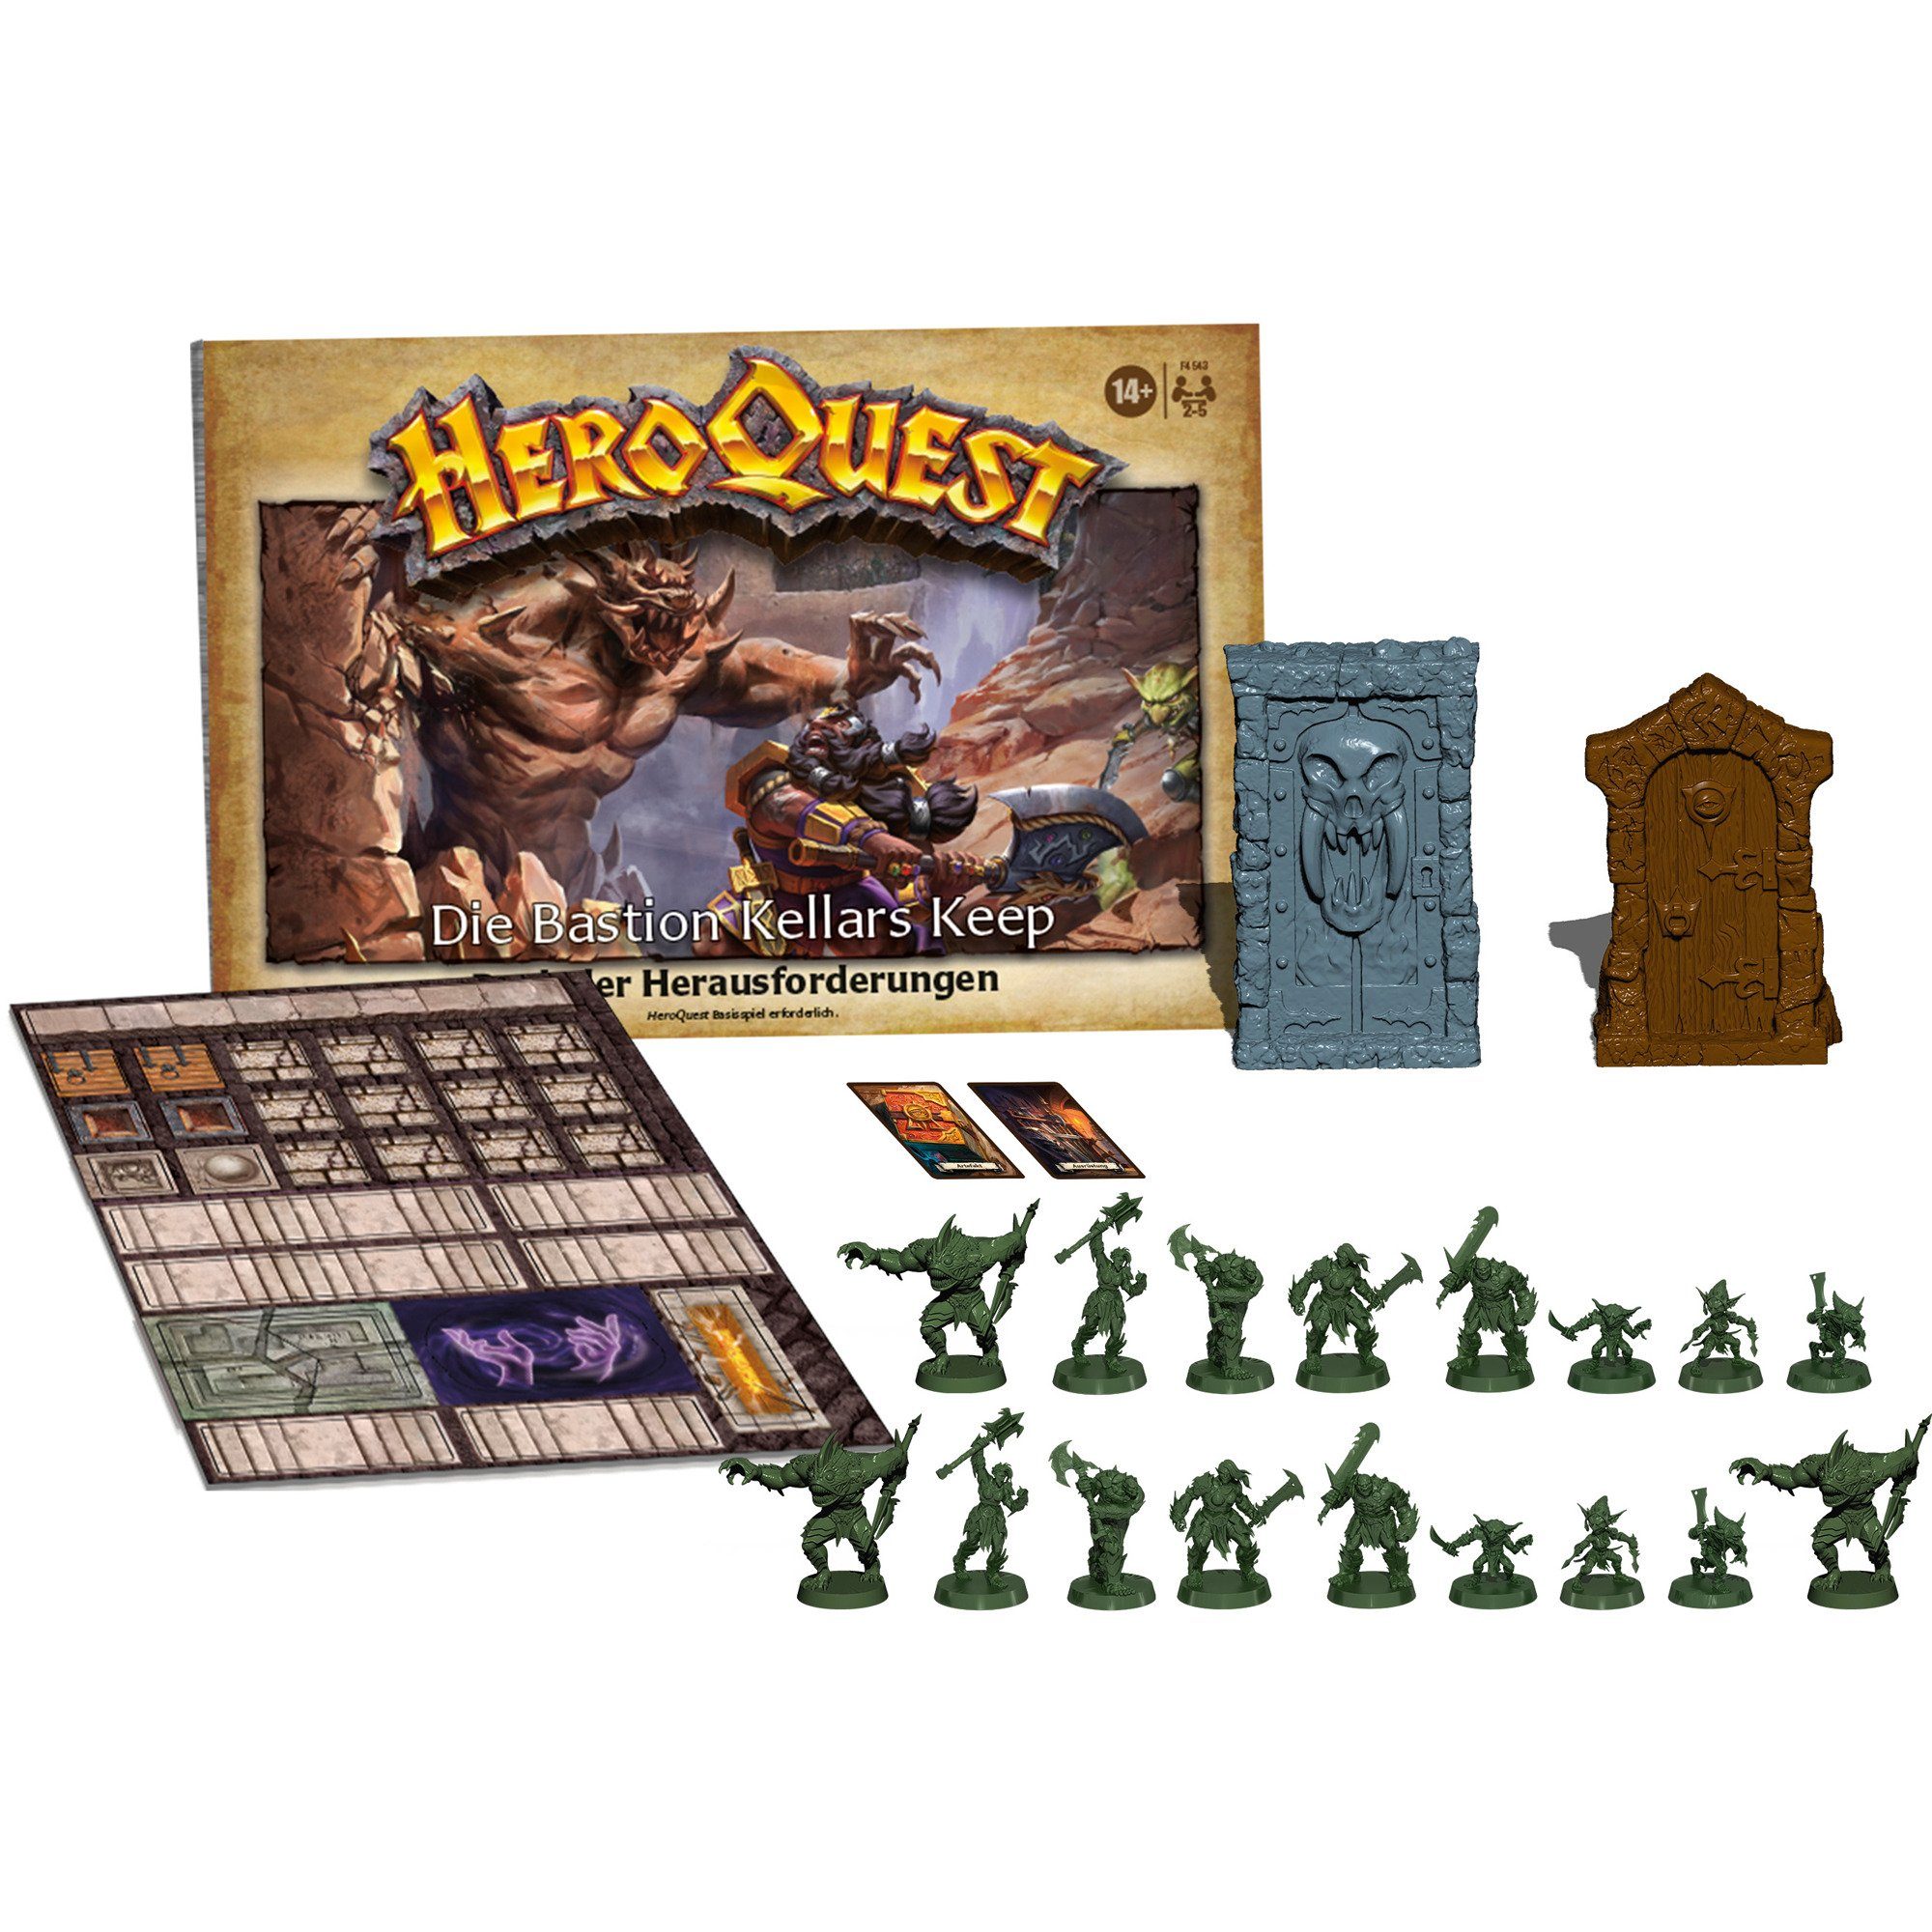 Hill - Hasbro Die Hasbro Spiel, Avalon Bastion HeroQuest Kellars